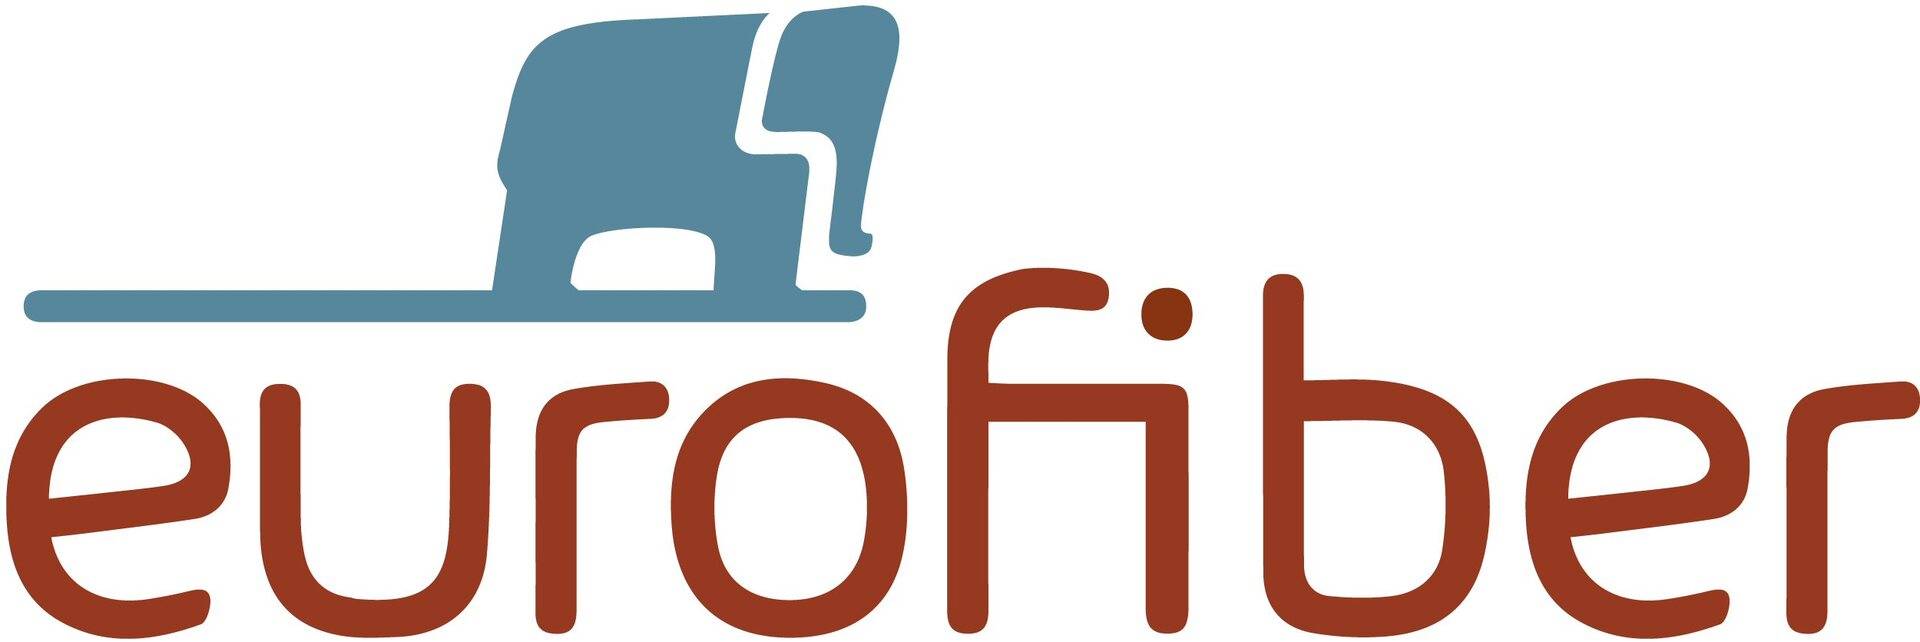 Eurofiber - logo